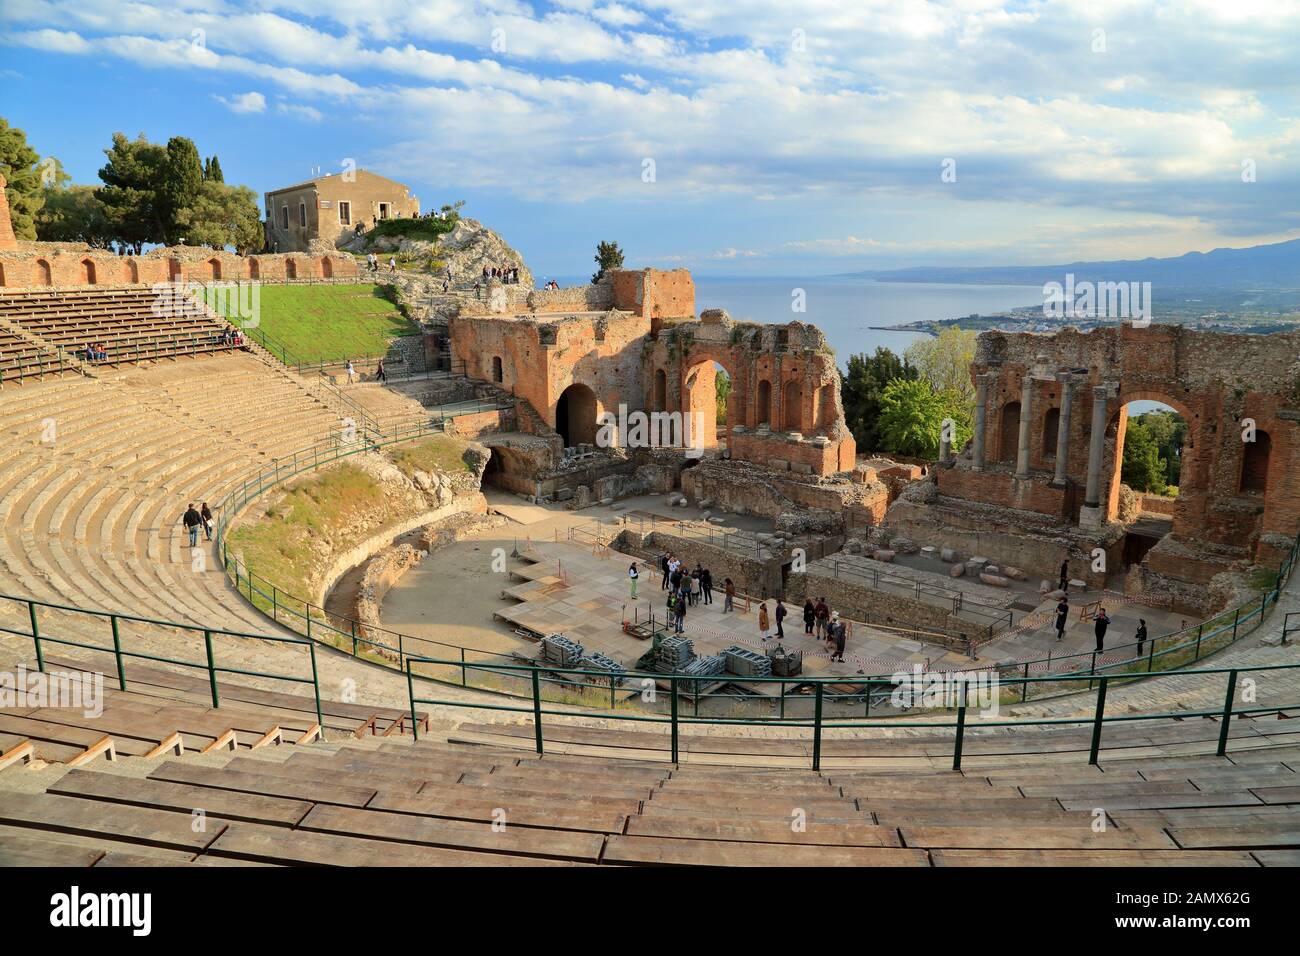 Antiguo teatro griego (Teatro Greco) de Taormina. Teatro antico di Taormina Foto de stock